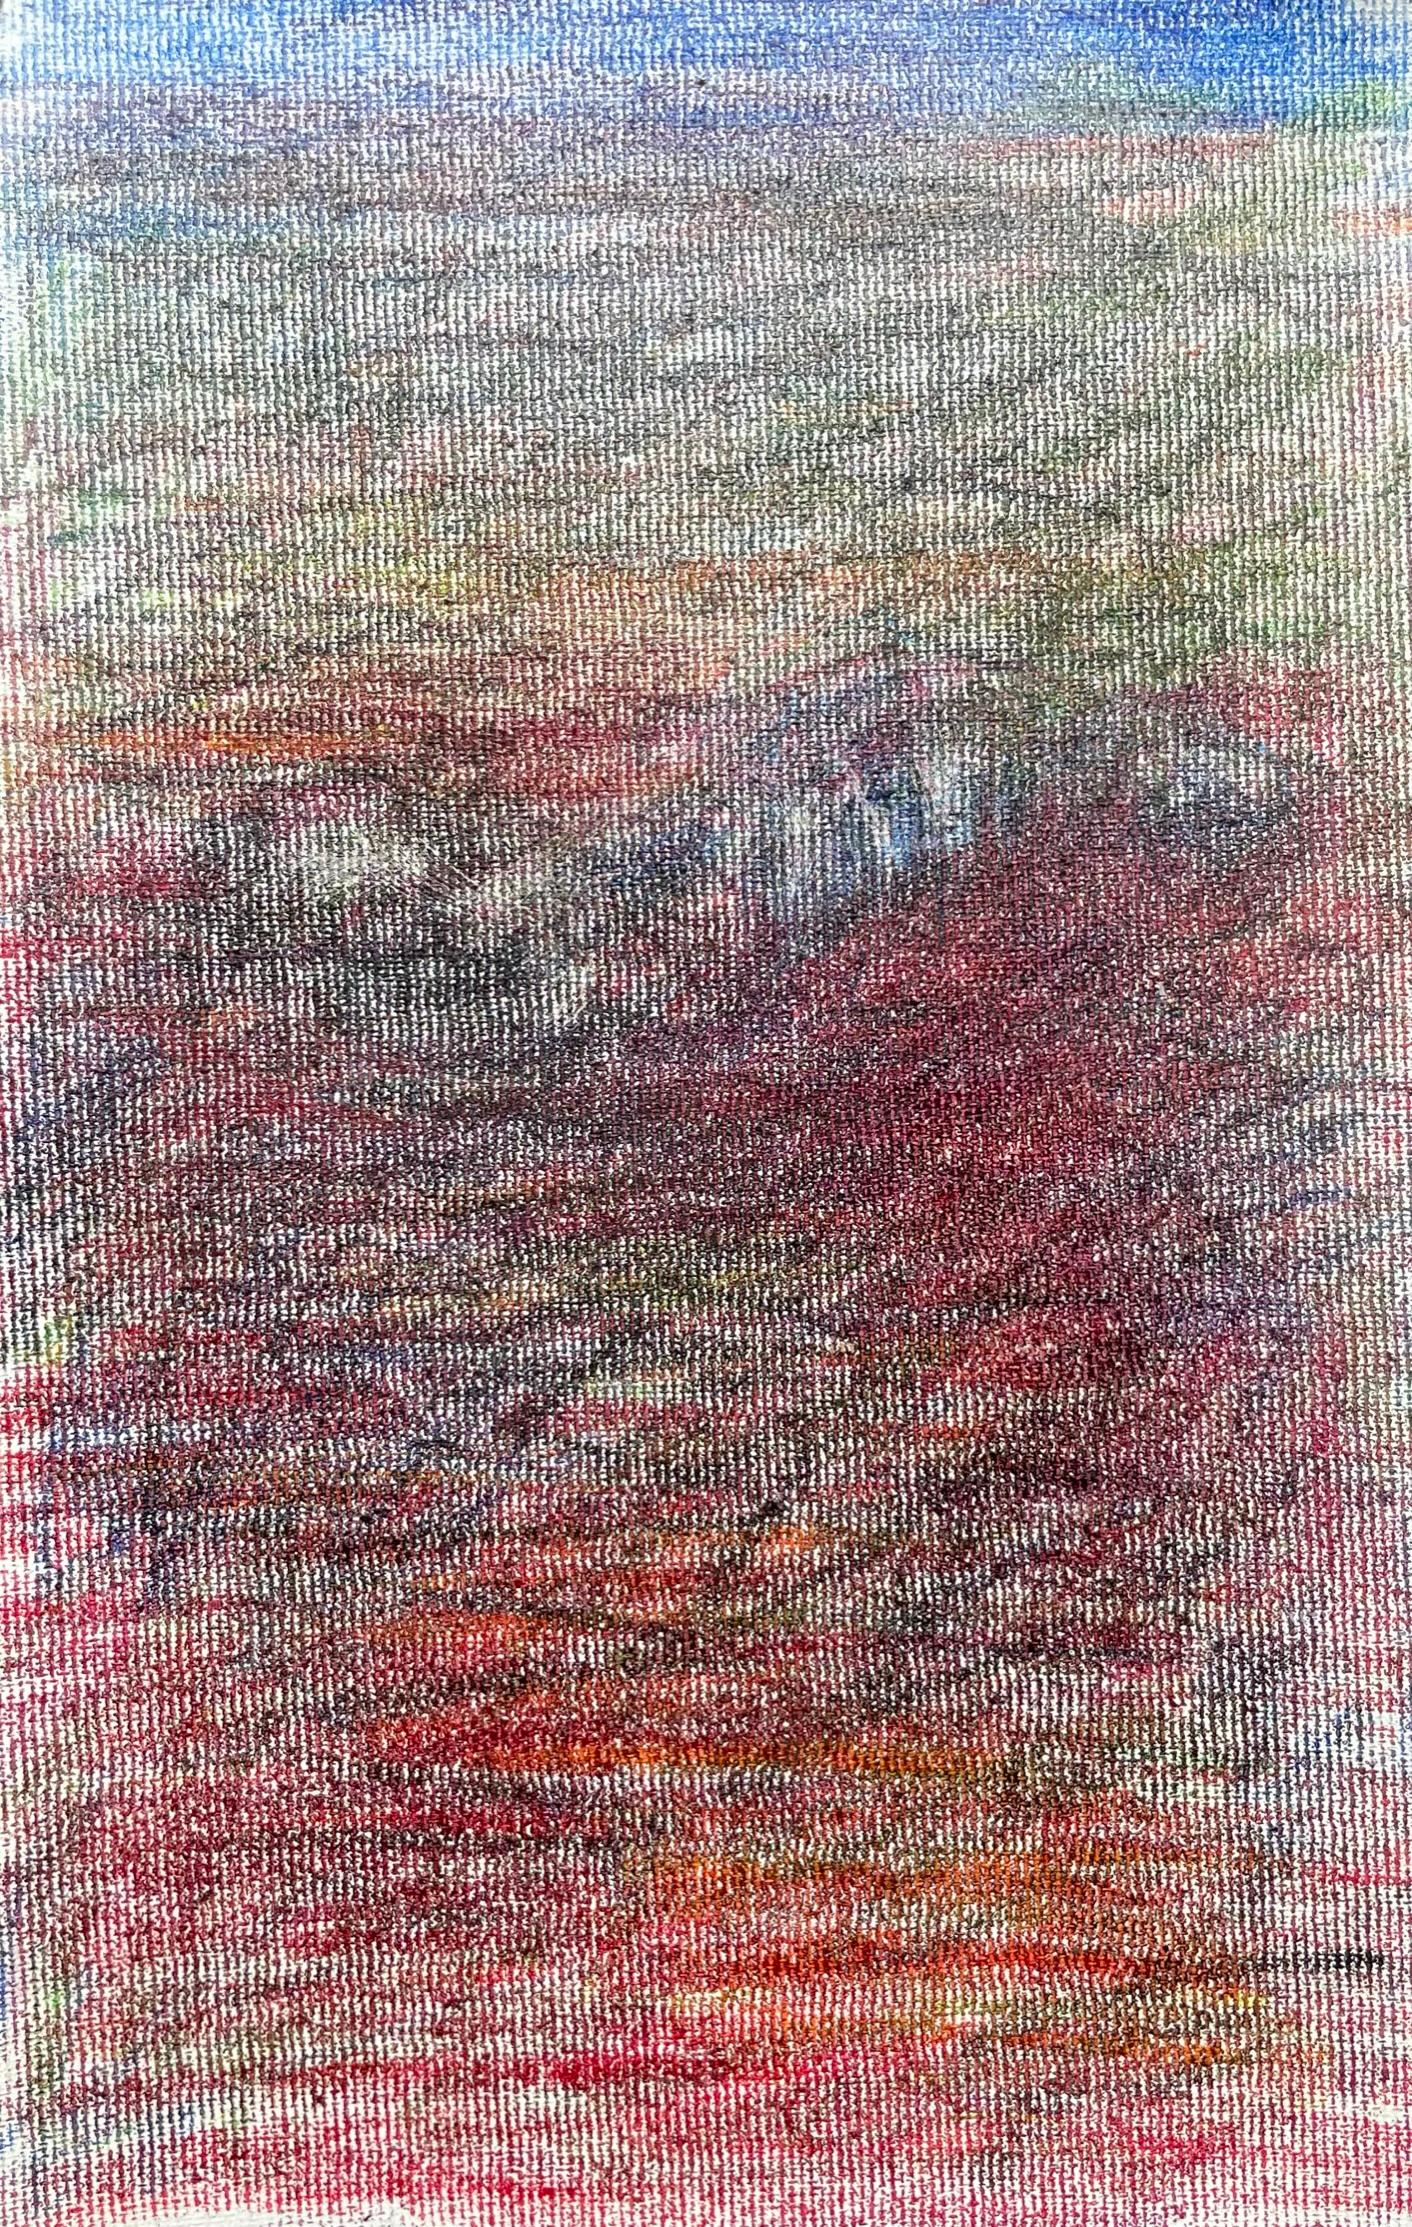 Zsolt Berszán Landscape Art - Body in the Field #2 - Red, Blue, Drawing, Coloured Pencils, Landscape